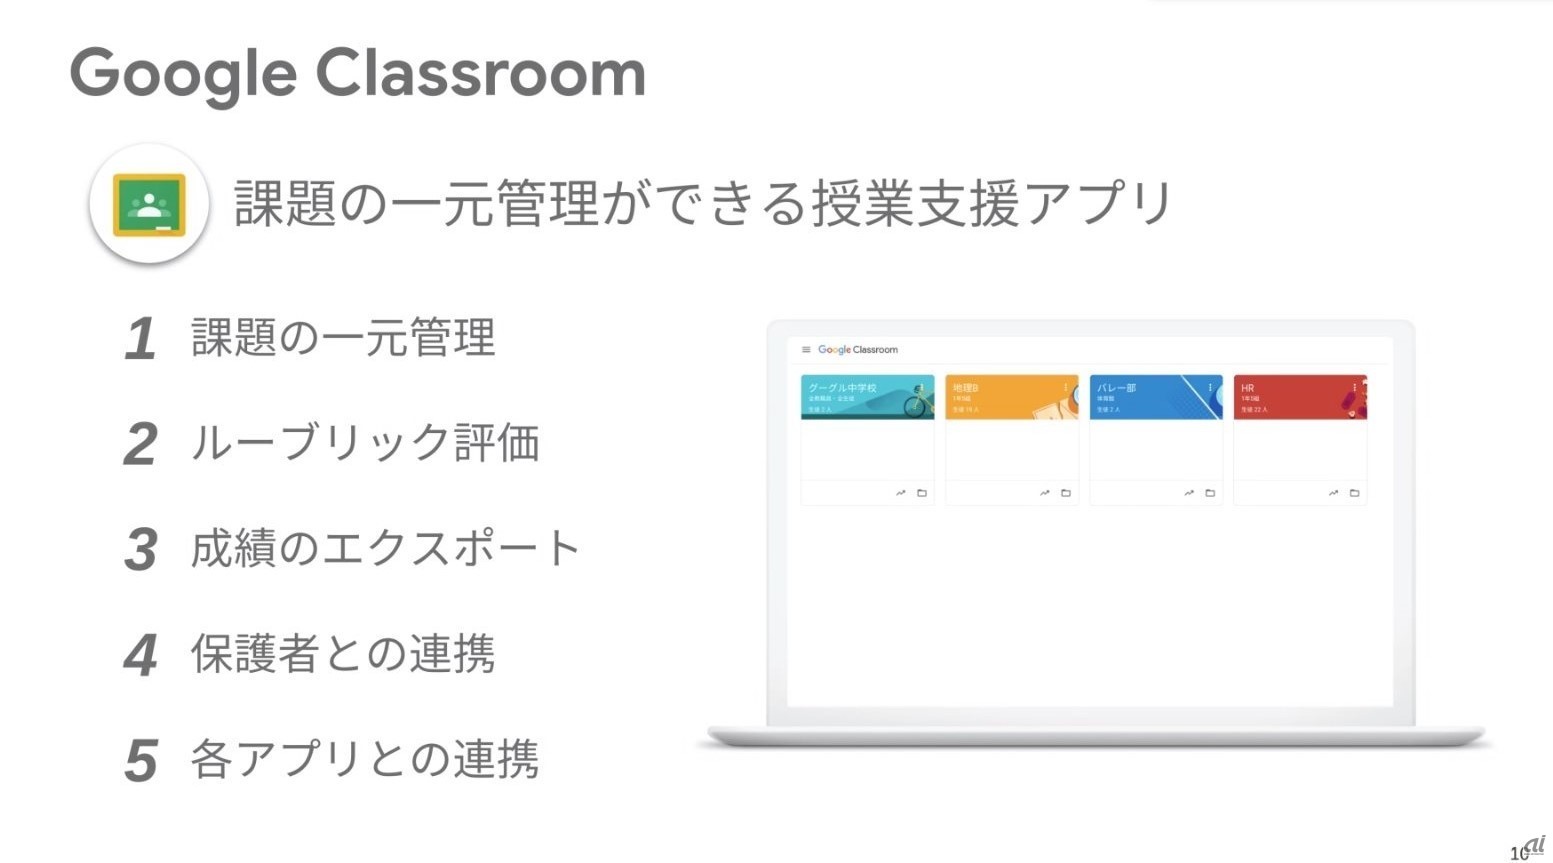 「Google Classroom」の機能